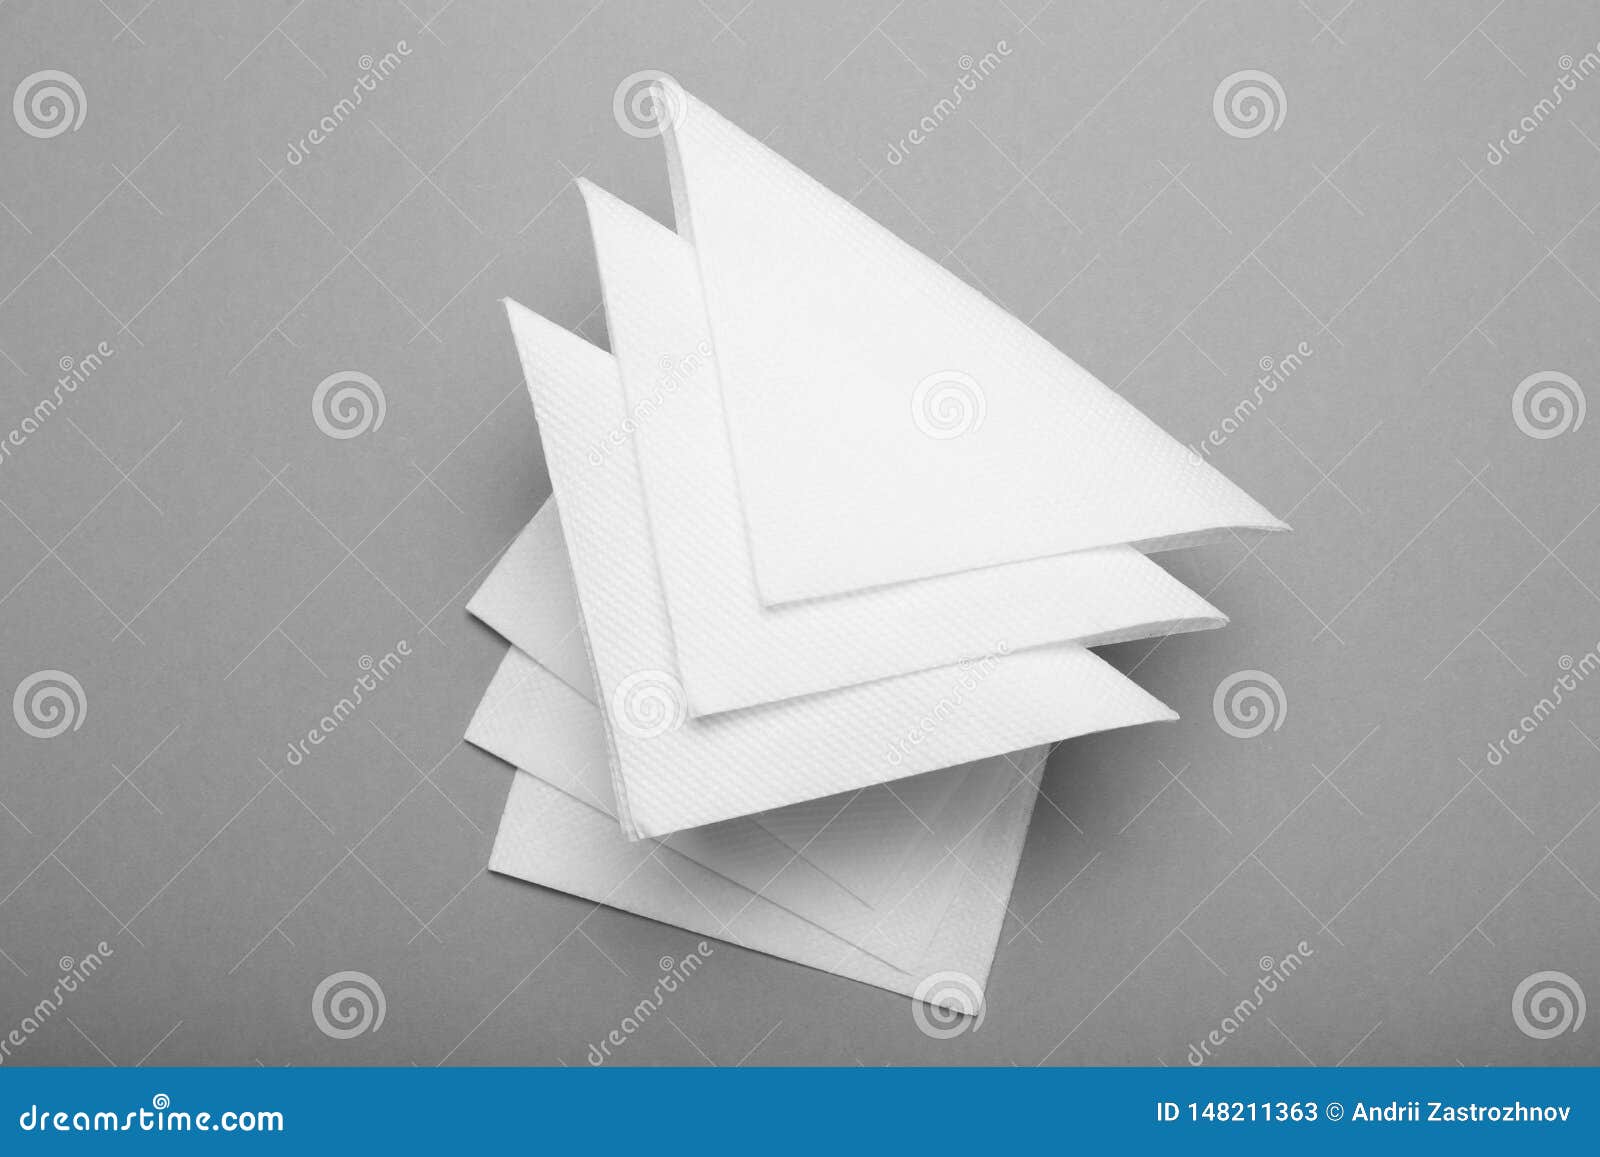 Download Restaurant Tissue White Paper Napkin Mockup Stock Image Image Of Background Serviette 148211363